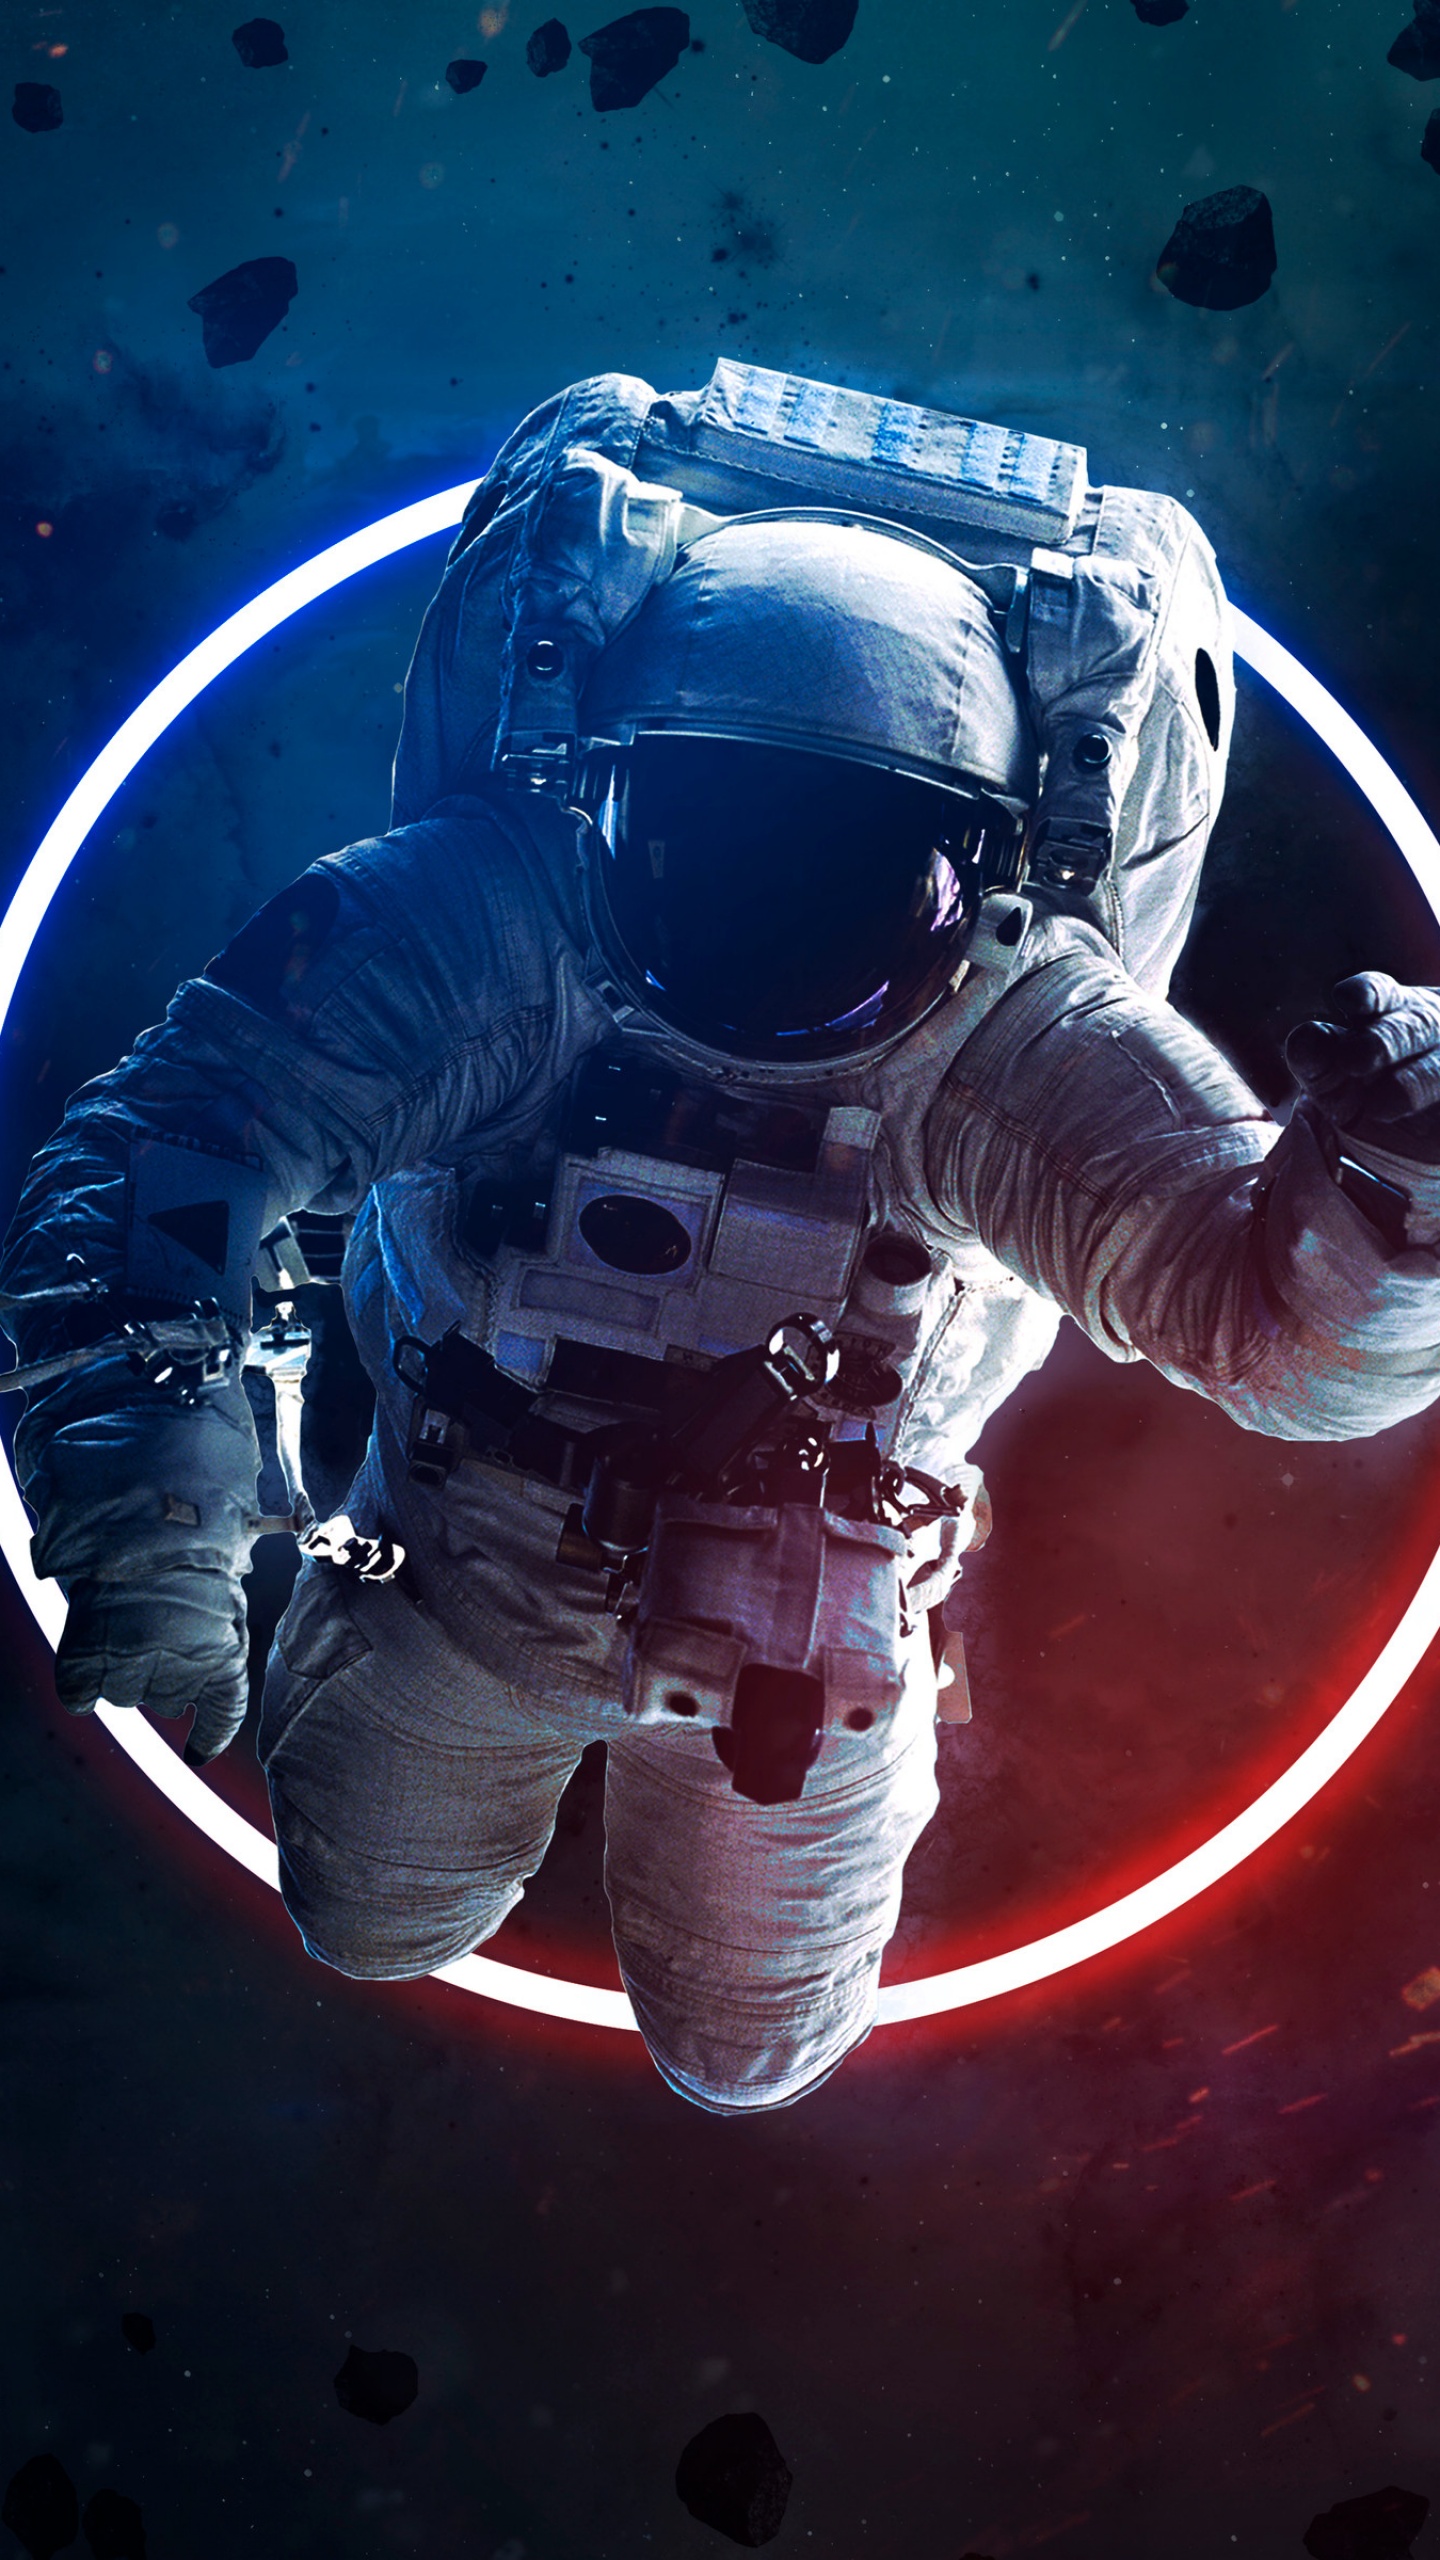 Astronaut 4K Wallpaper, Asteroids, Space suit, Neon light, Space travel